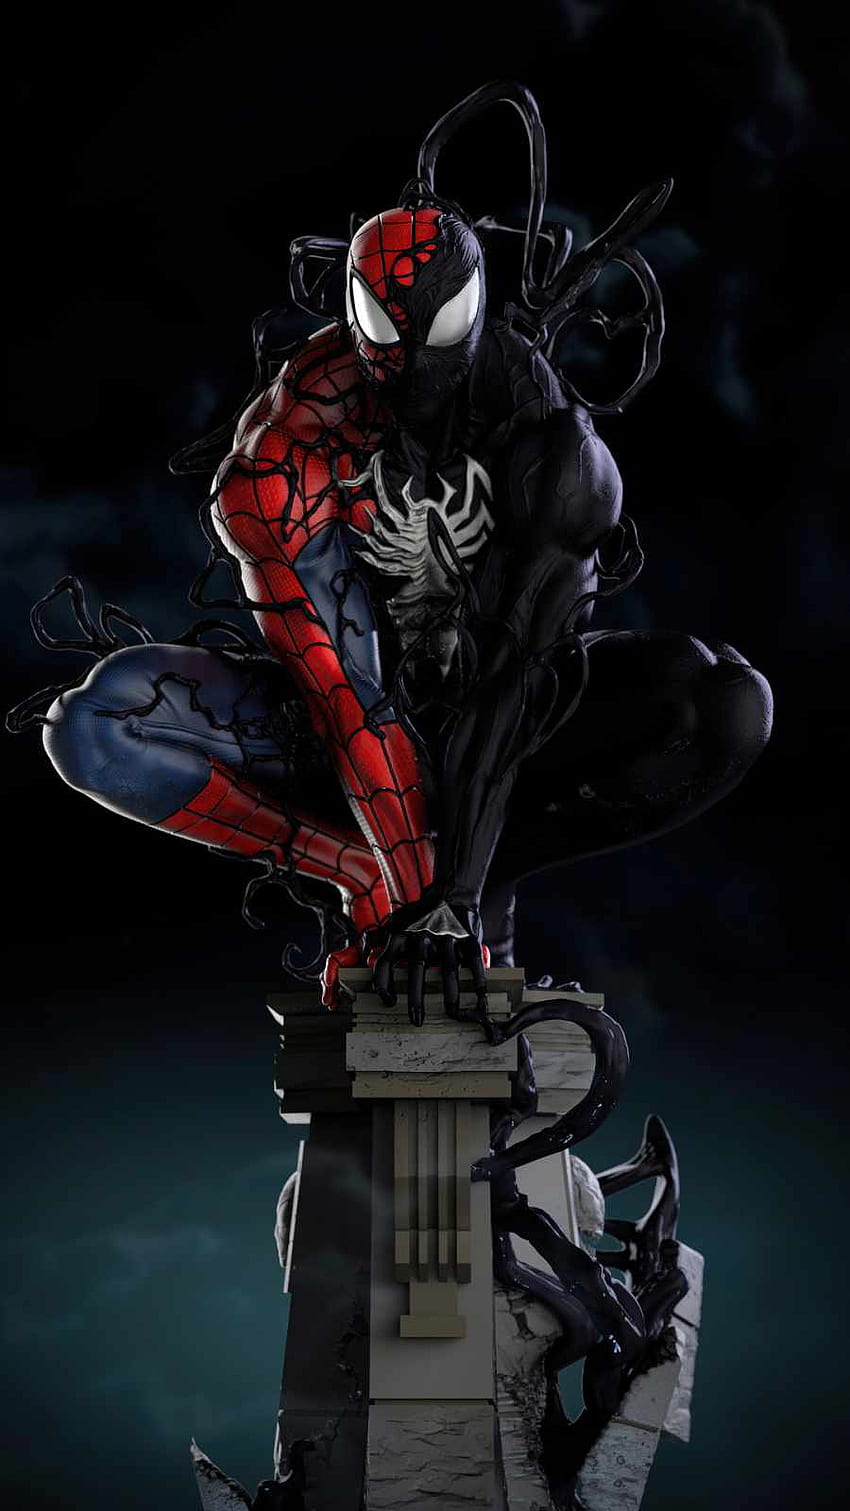 Spiderman Symbiote Transformation - IPhone : iPhone , Symbiote Spider-Man Papel de parede de celular HD